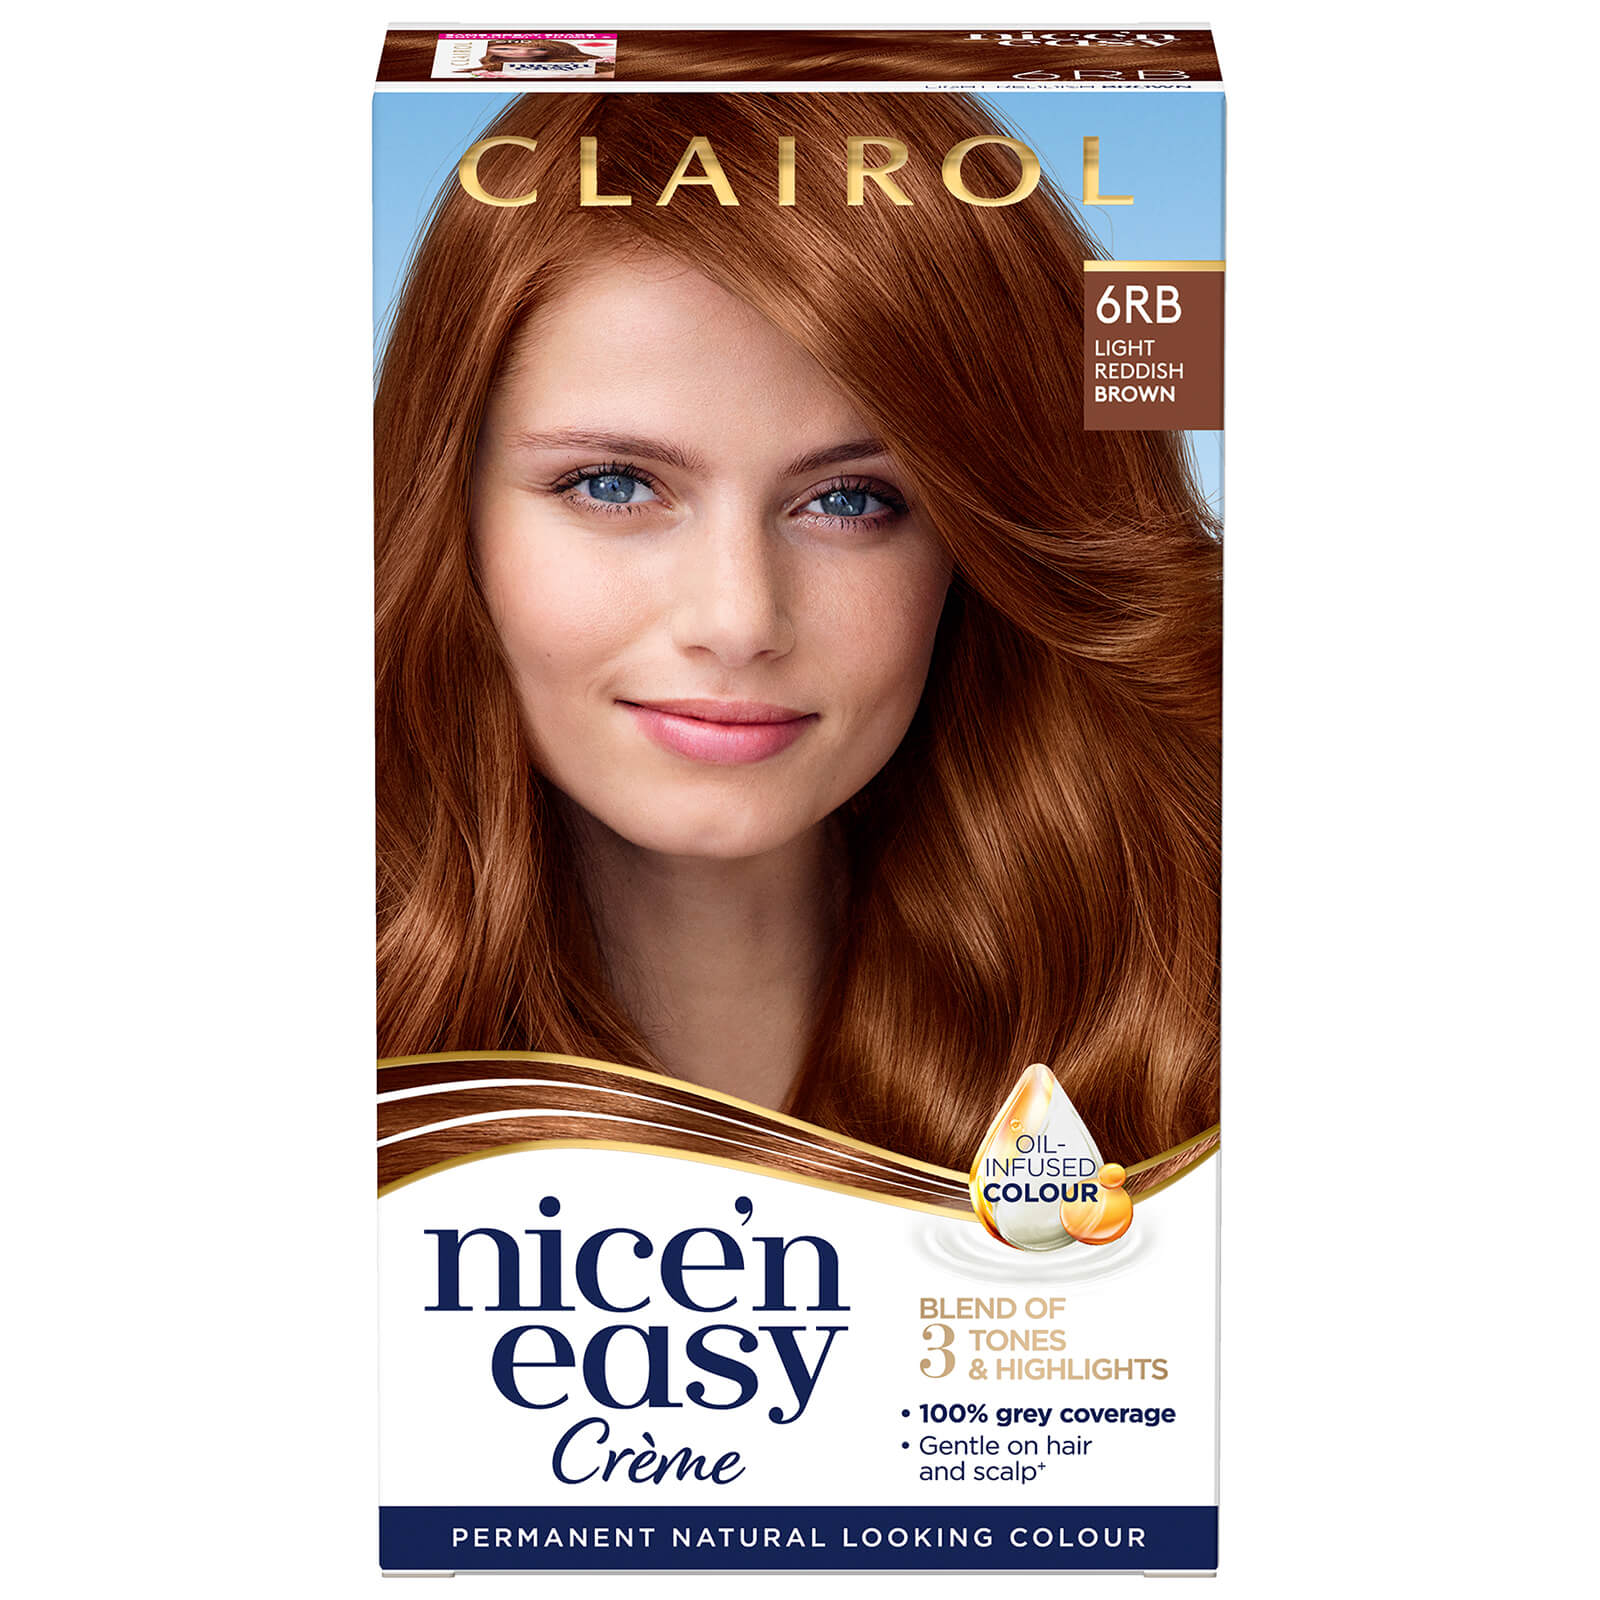 Clairol Nice' n Easy Crème Natural Looking Oil Infused Permanent Hair Dye 177ml (Various Shades) - 6RB Light Reddish Brown